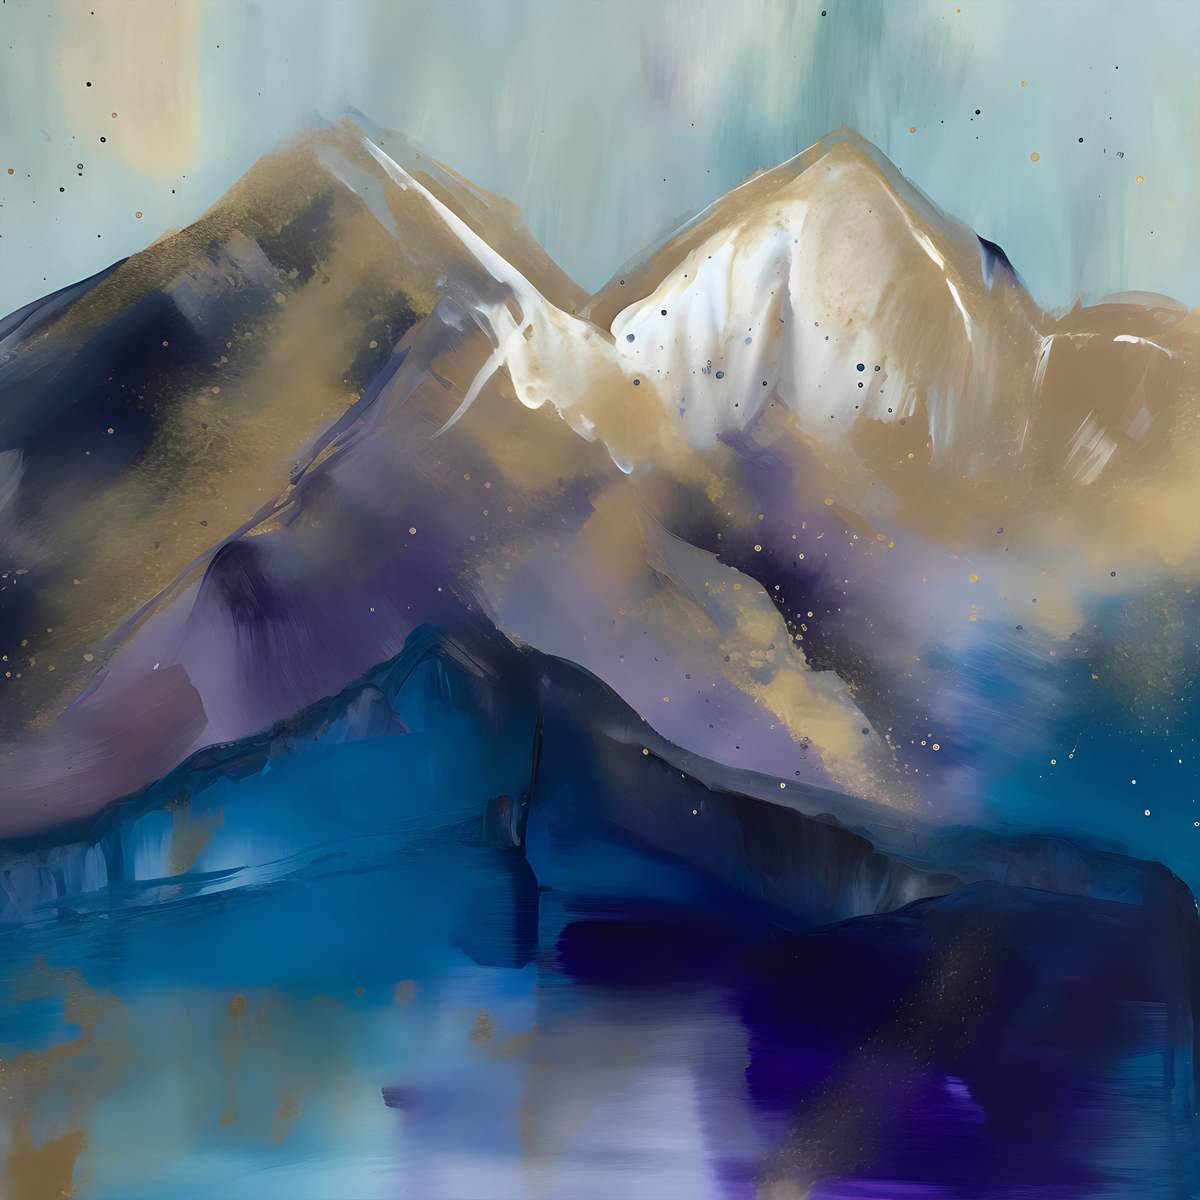 Majestic Peak: Awe-Inspiring Heights in Blue - Art Print on Paper. ARTEMYST